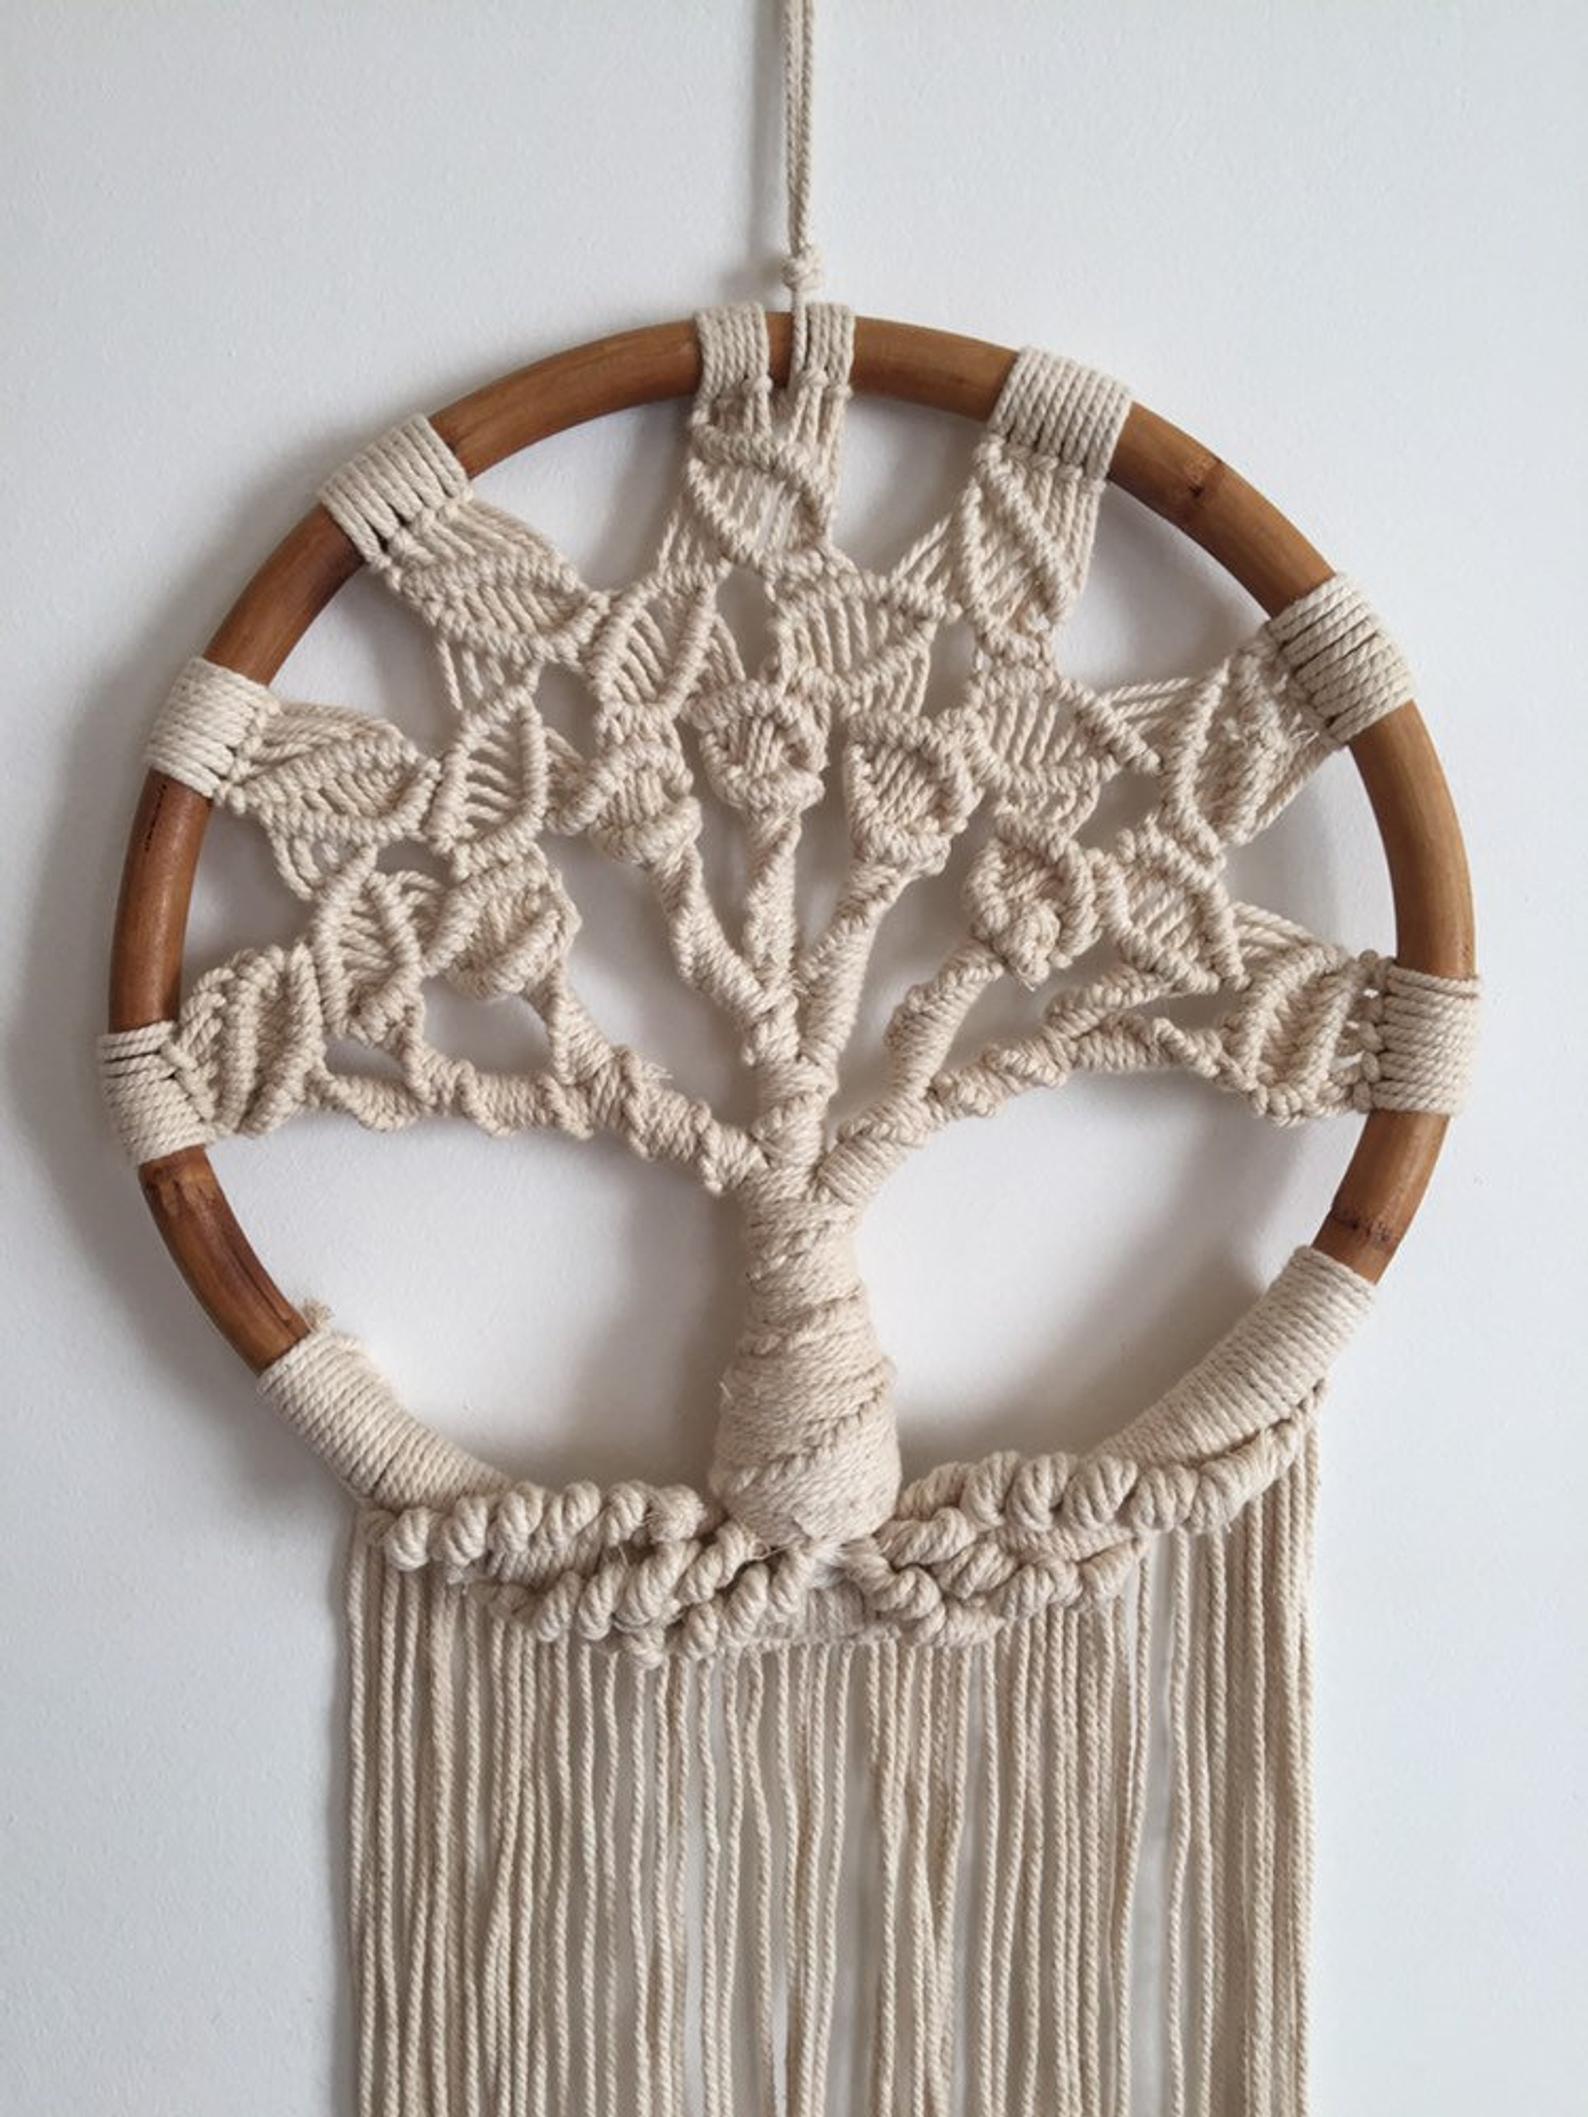 Tree of Life - an universal symbol beyond fashion trend